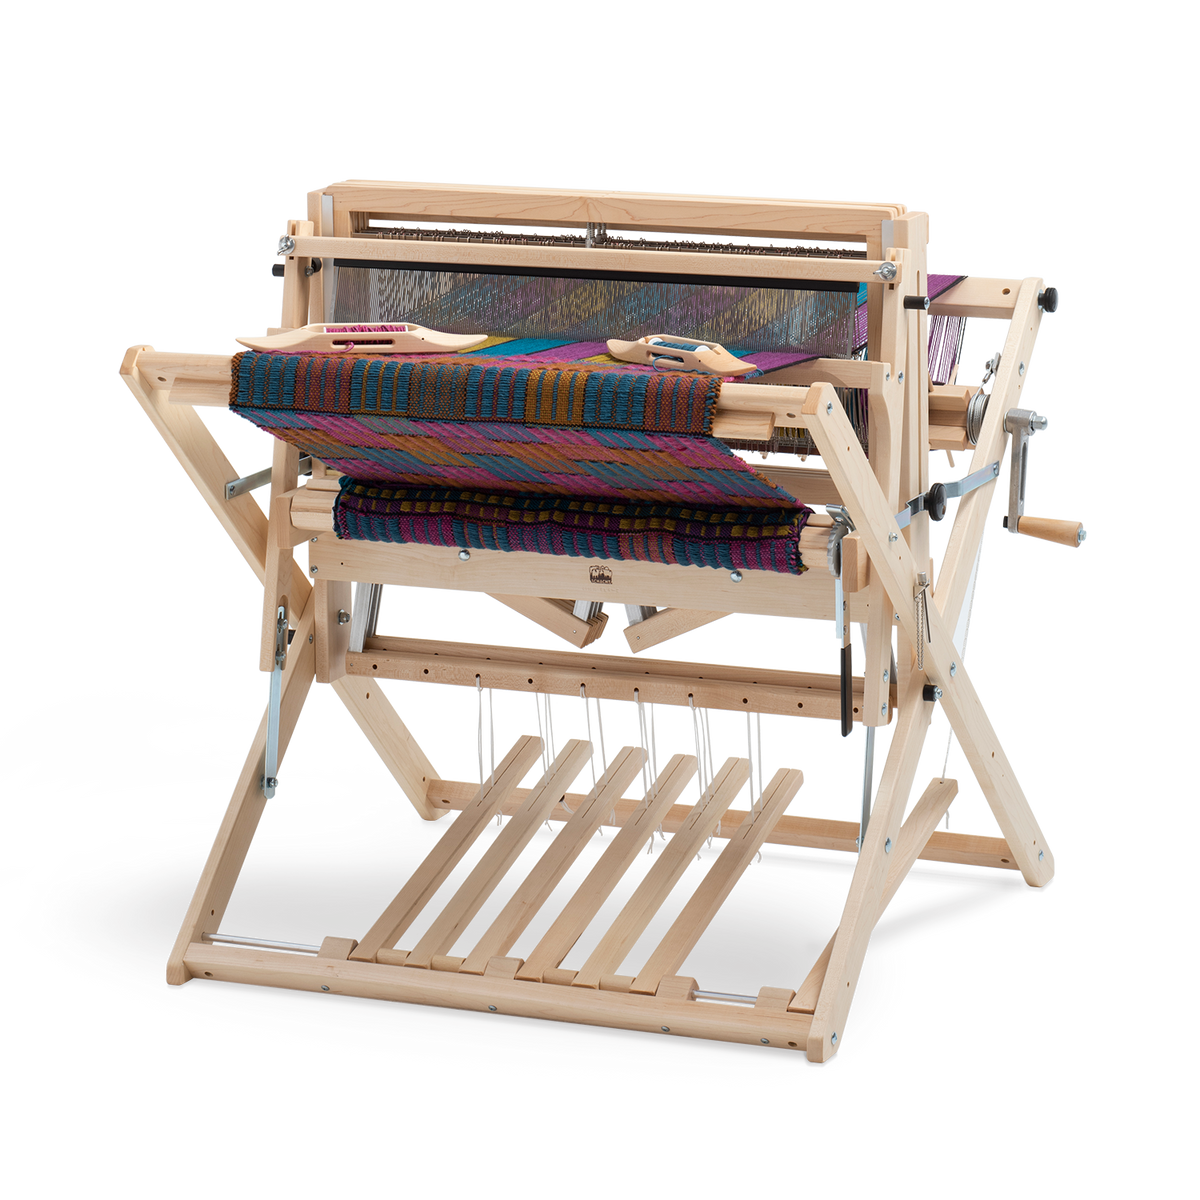 Best Loom Kits for Learning Weaving Skills